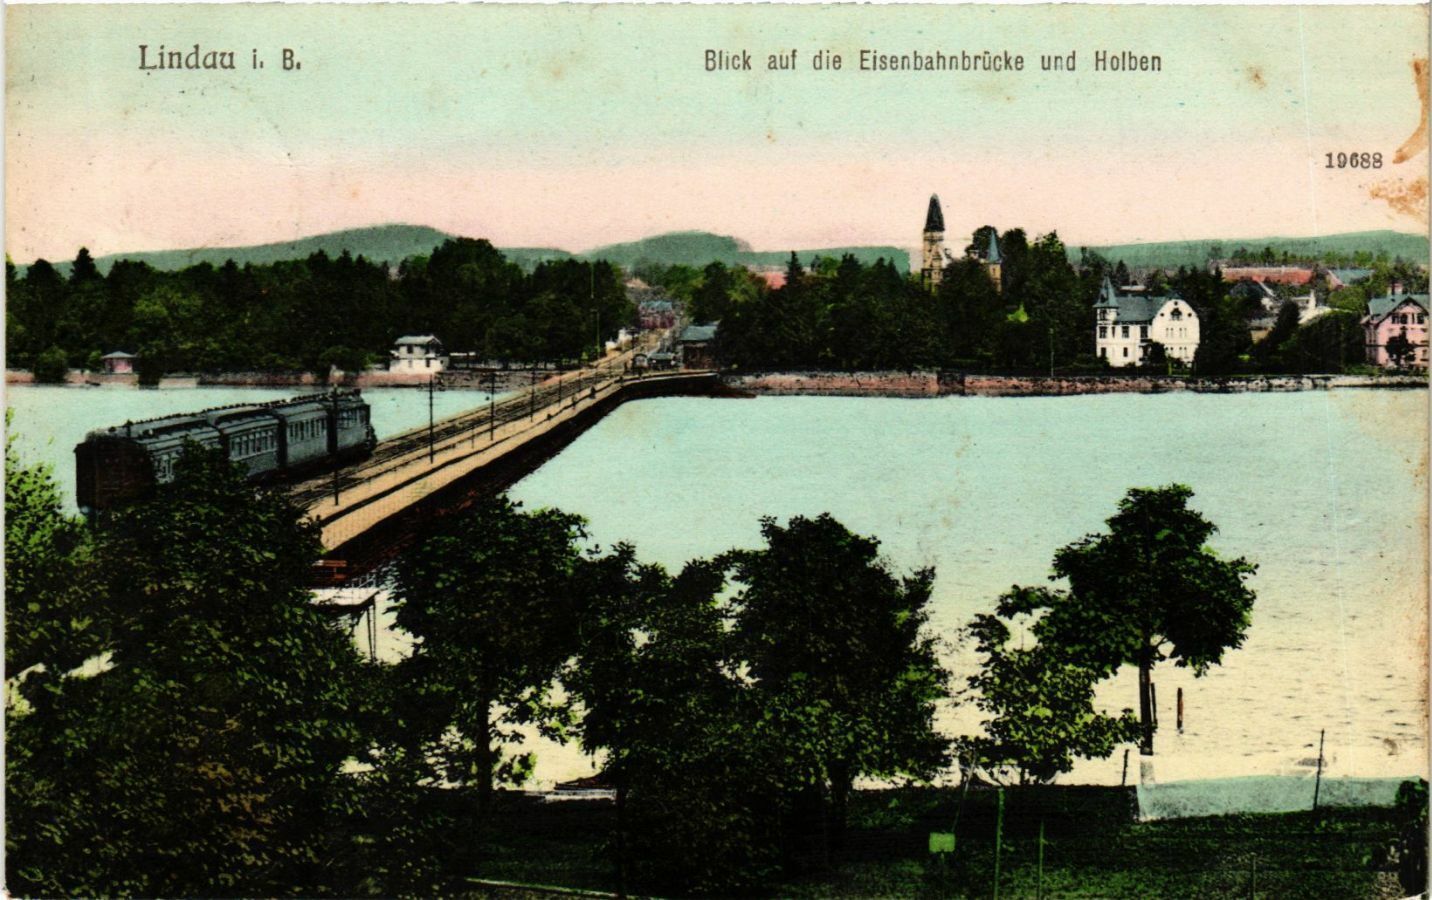 CPA AK Lindau I.B. - View of the railway bridge and Holben GERMANY (882400)